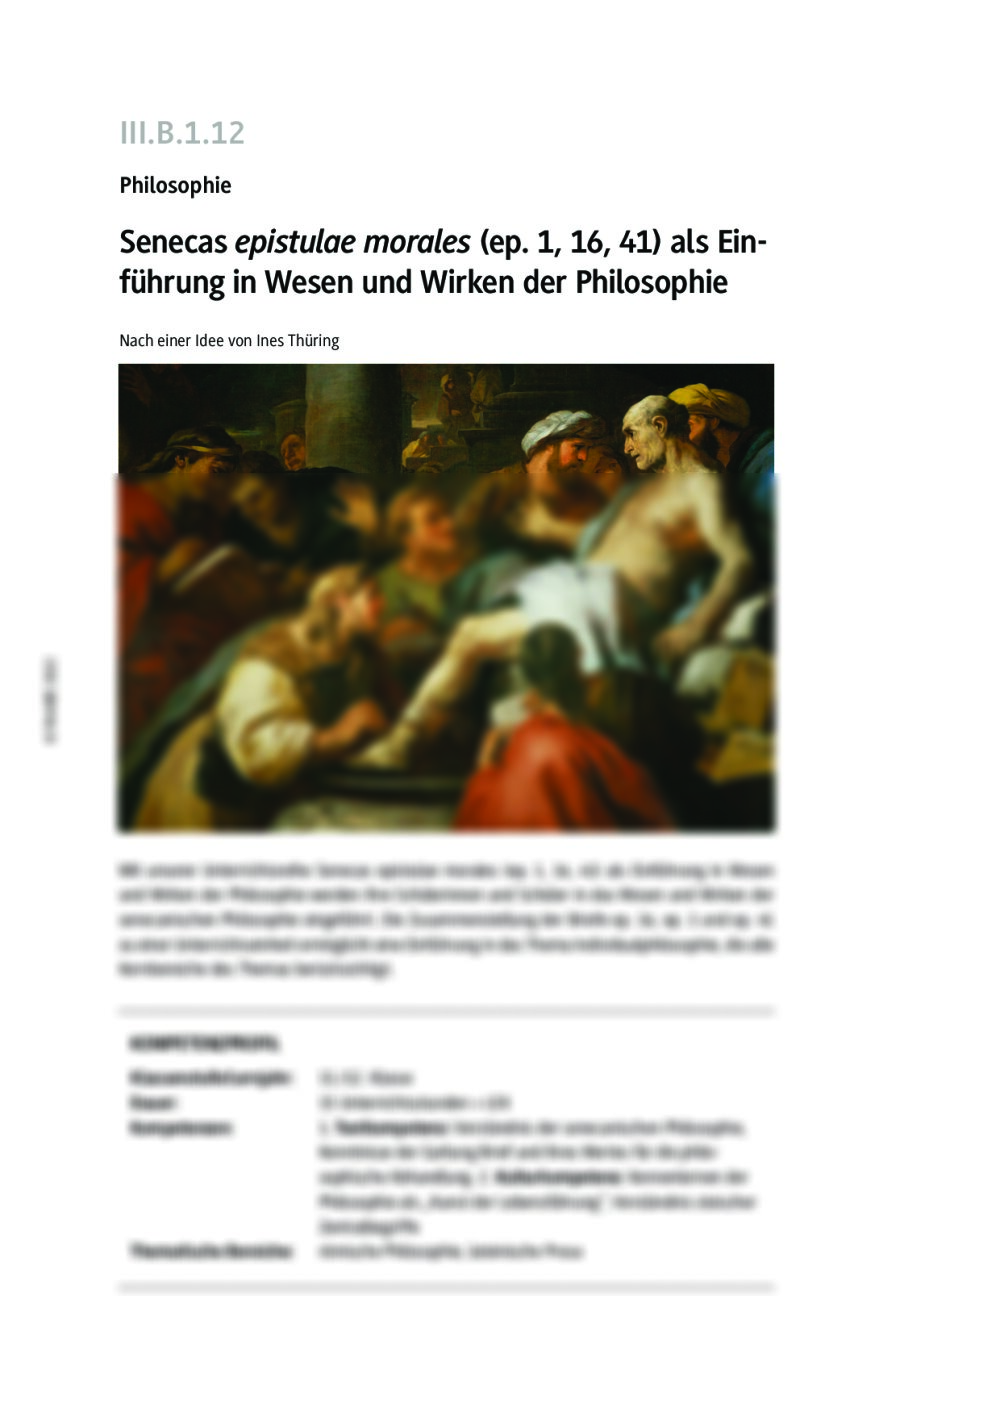 Senecas „epistulae morales“ (ep. 1, 16, 41) - Seite 1